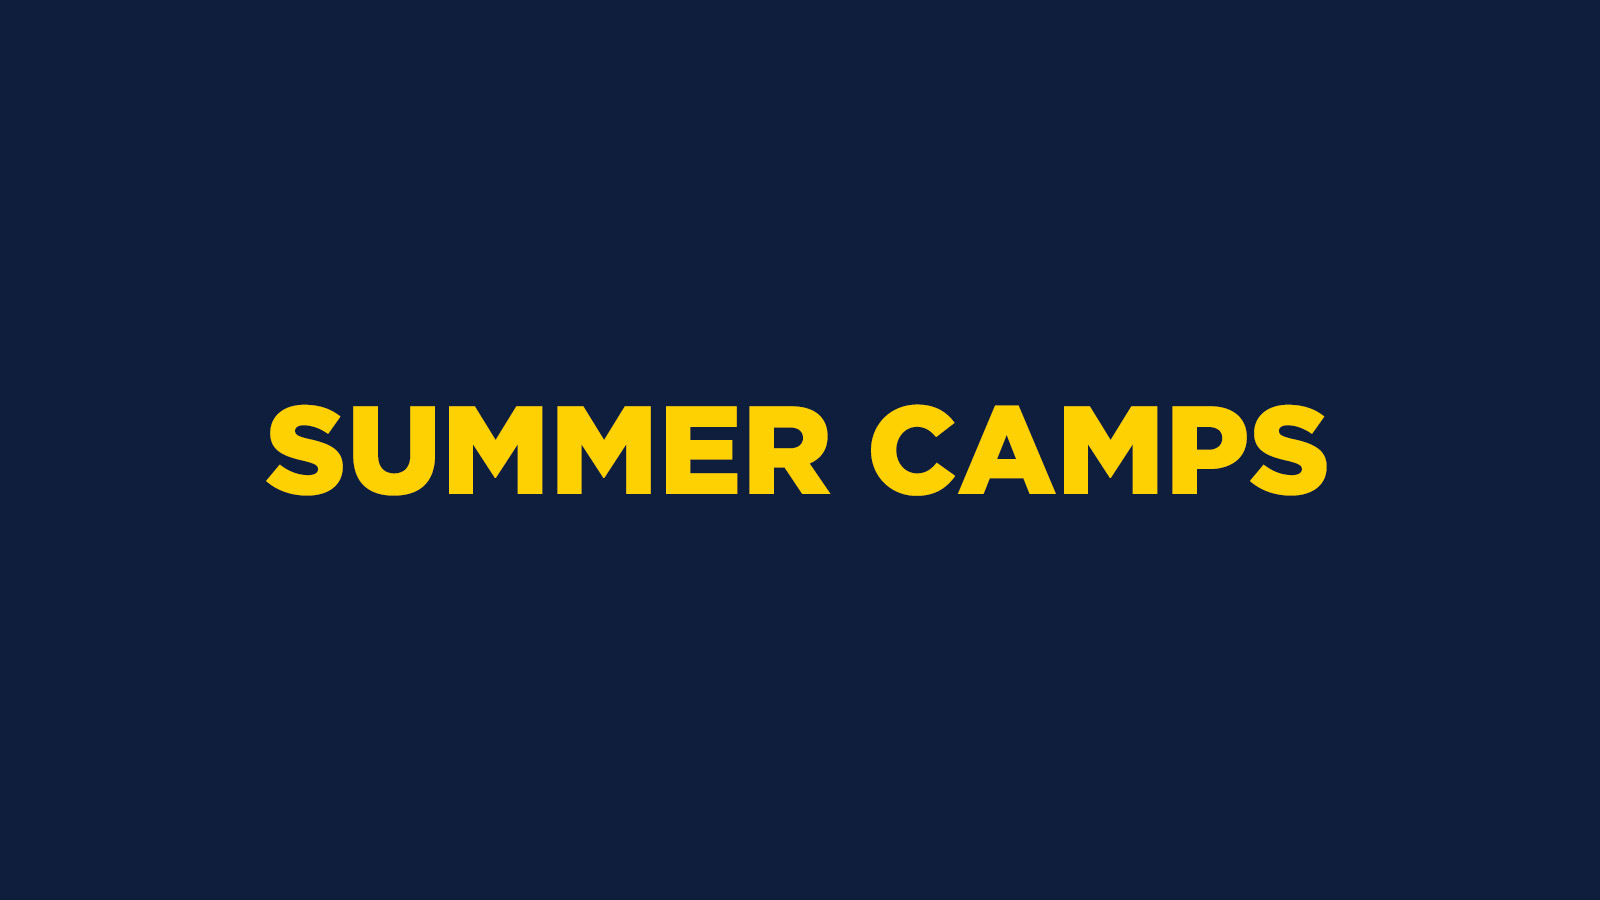 SUMMER CAMPS